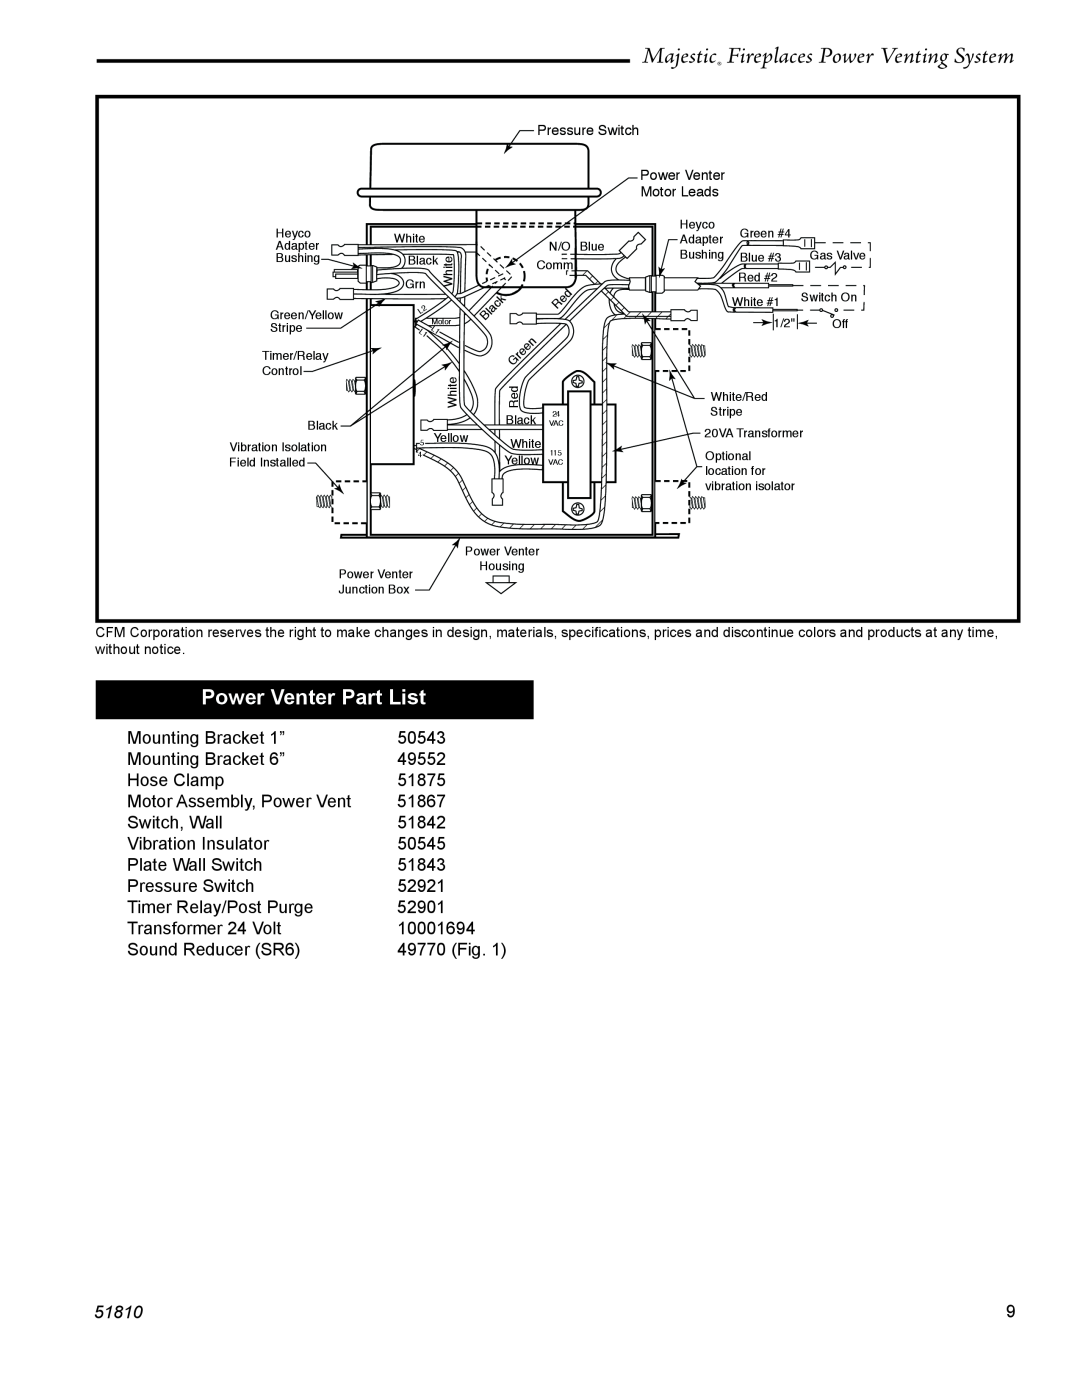 CFM Corporation PVS-1 manual Power Venter Part List, Majestic Fireplaces Power Venting System, 51810 